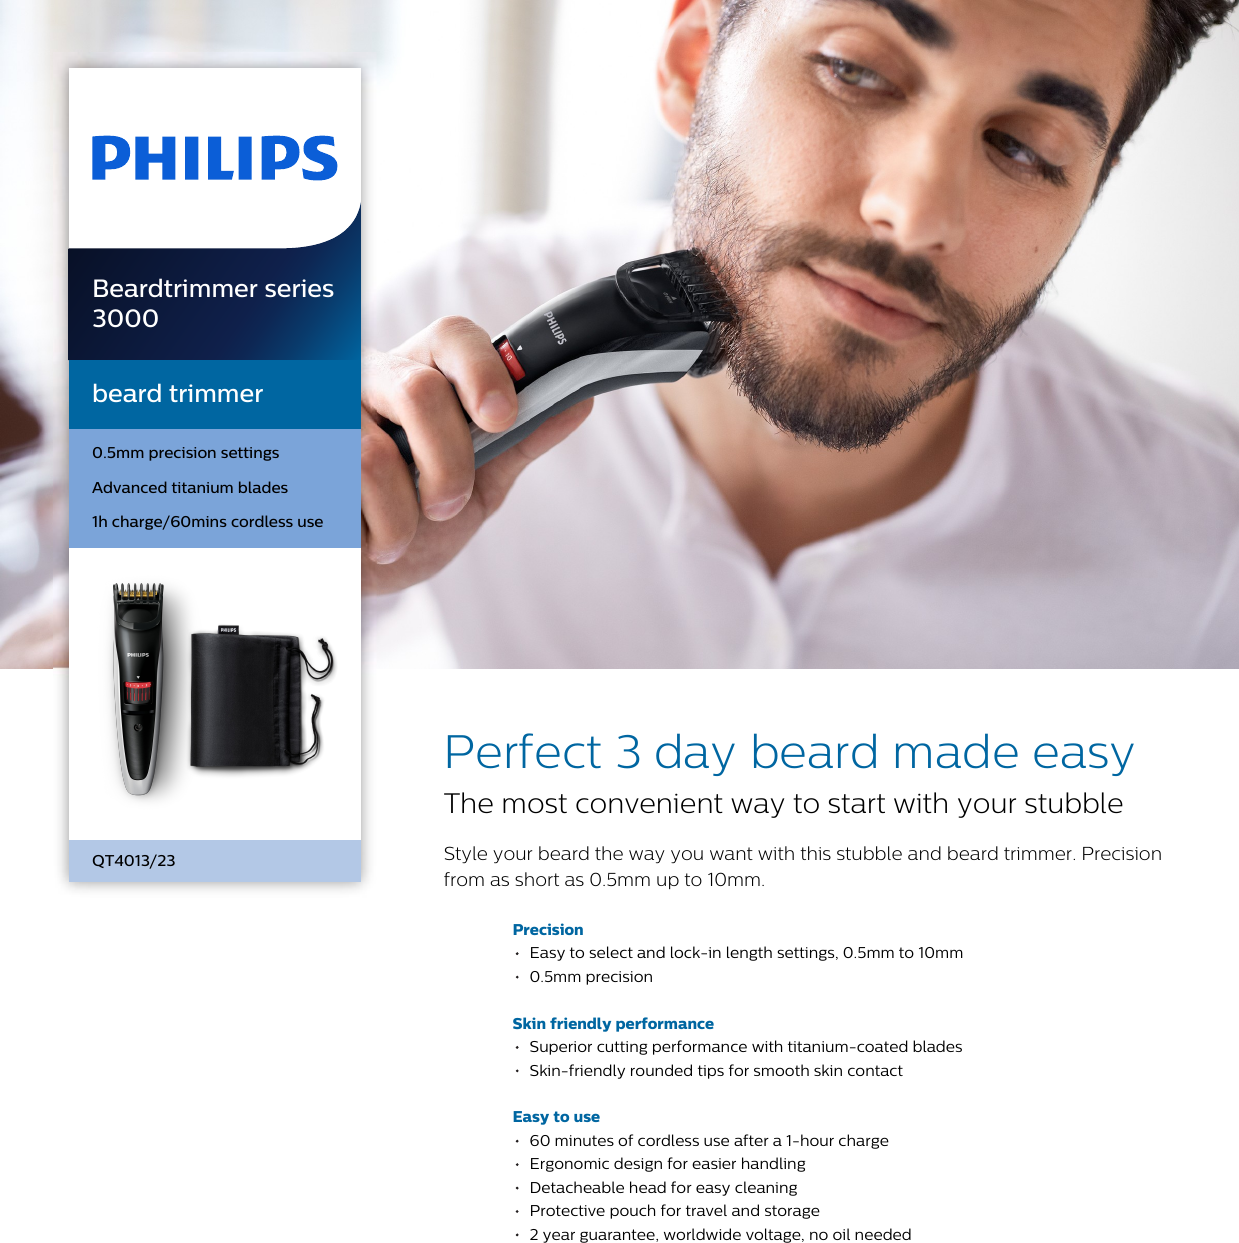 philips 3 day beard made easy